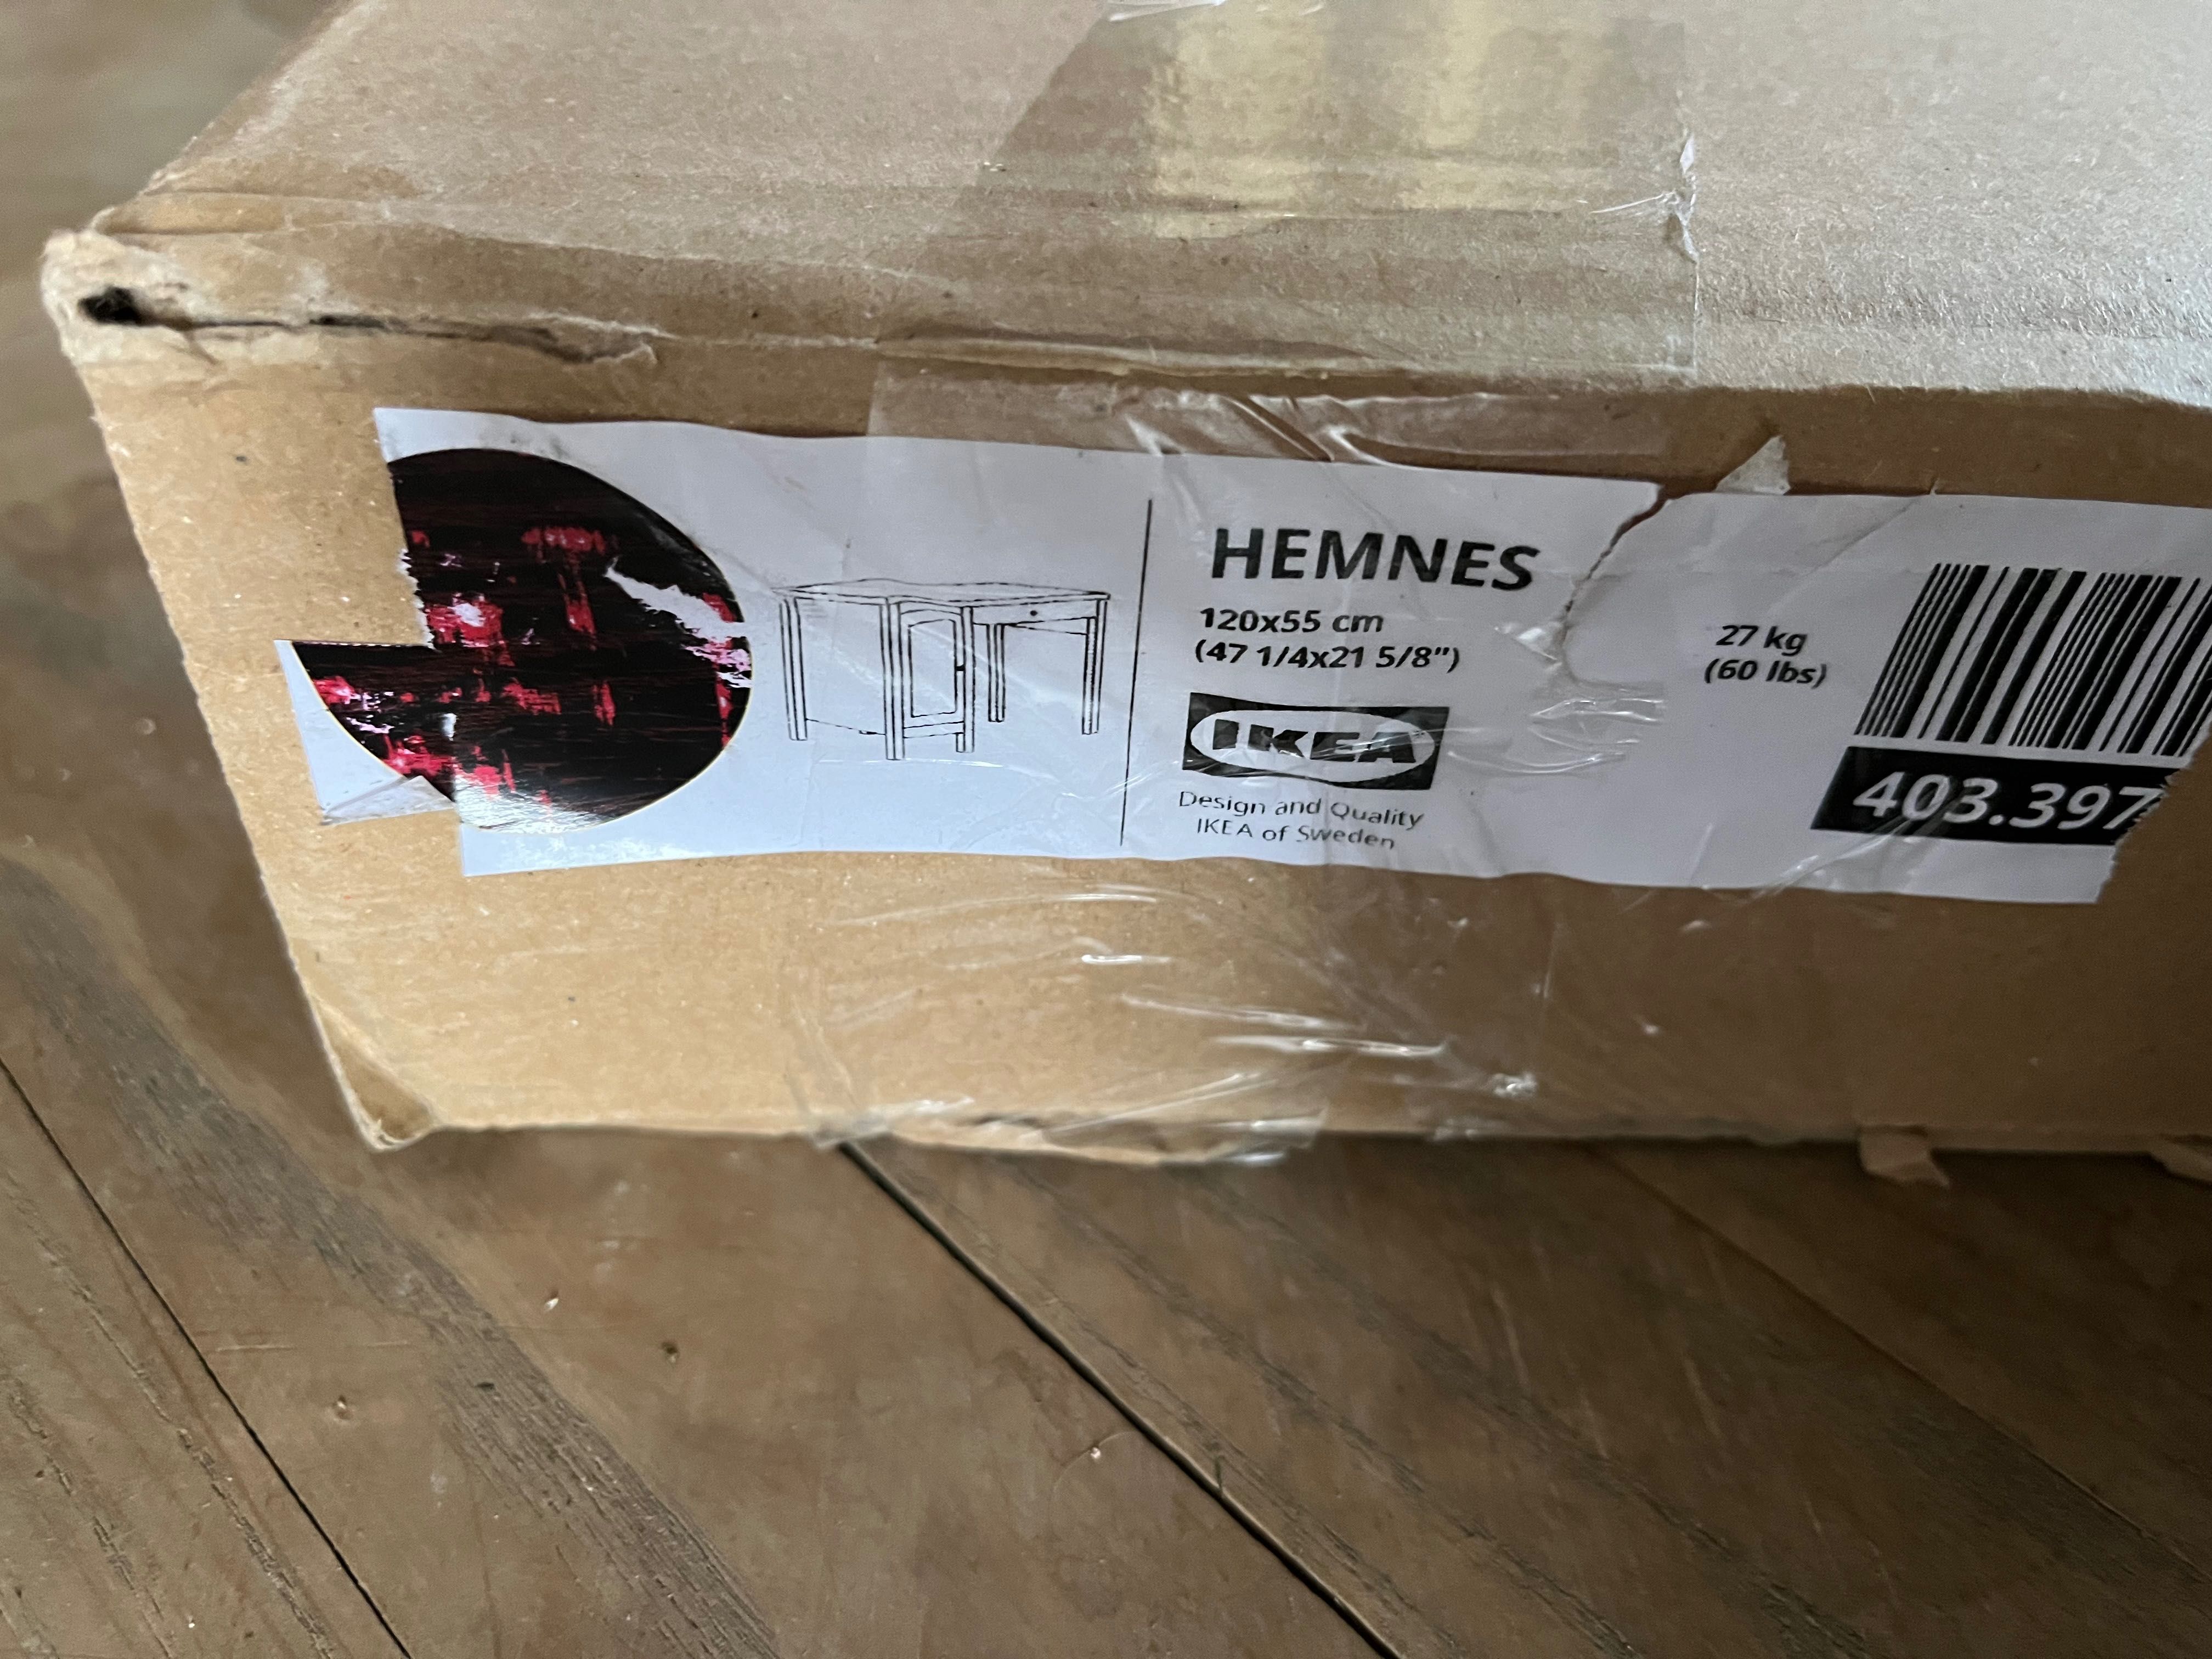 Ikea HEMNES
Biurko, czarnybrąz, 120x55 cm